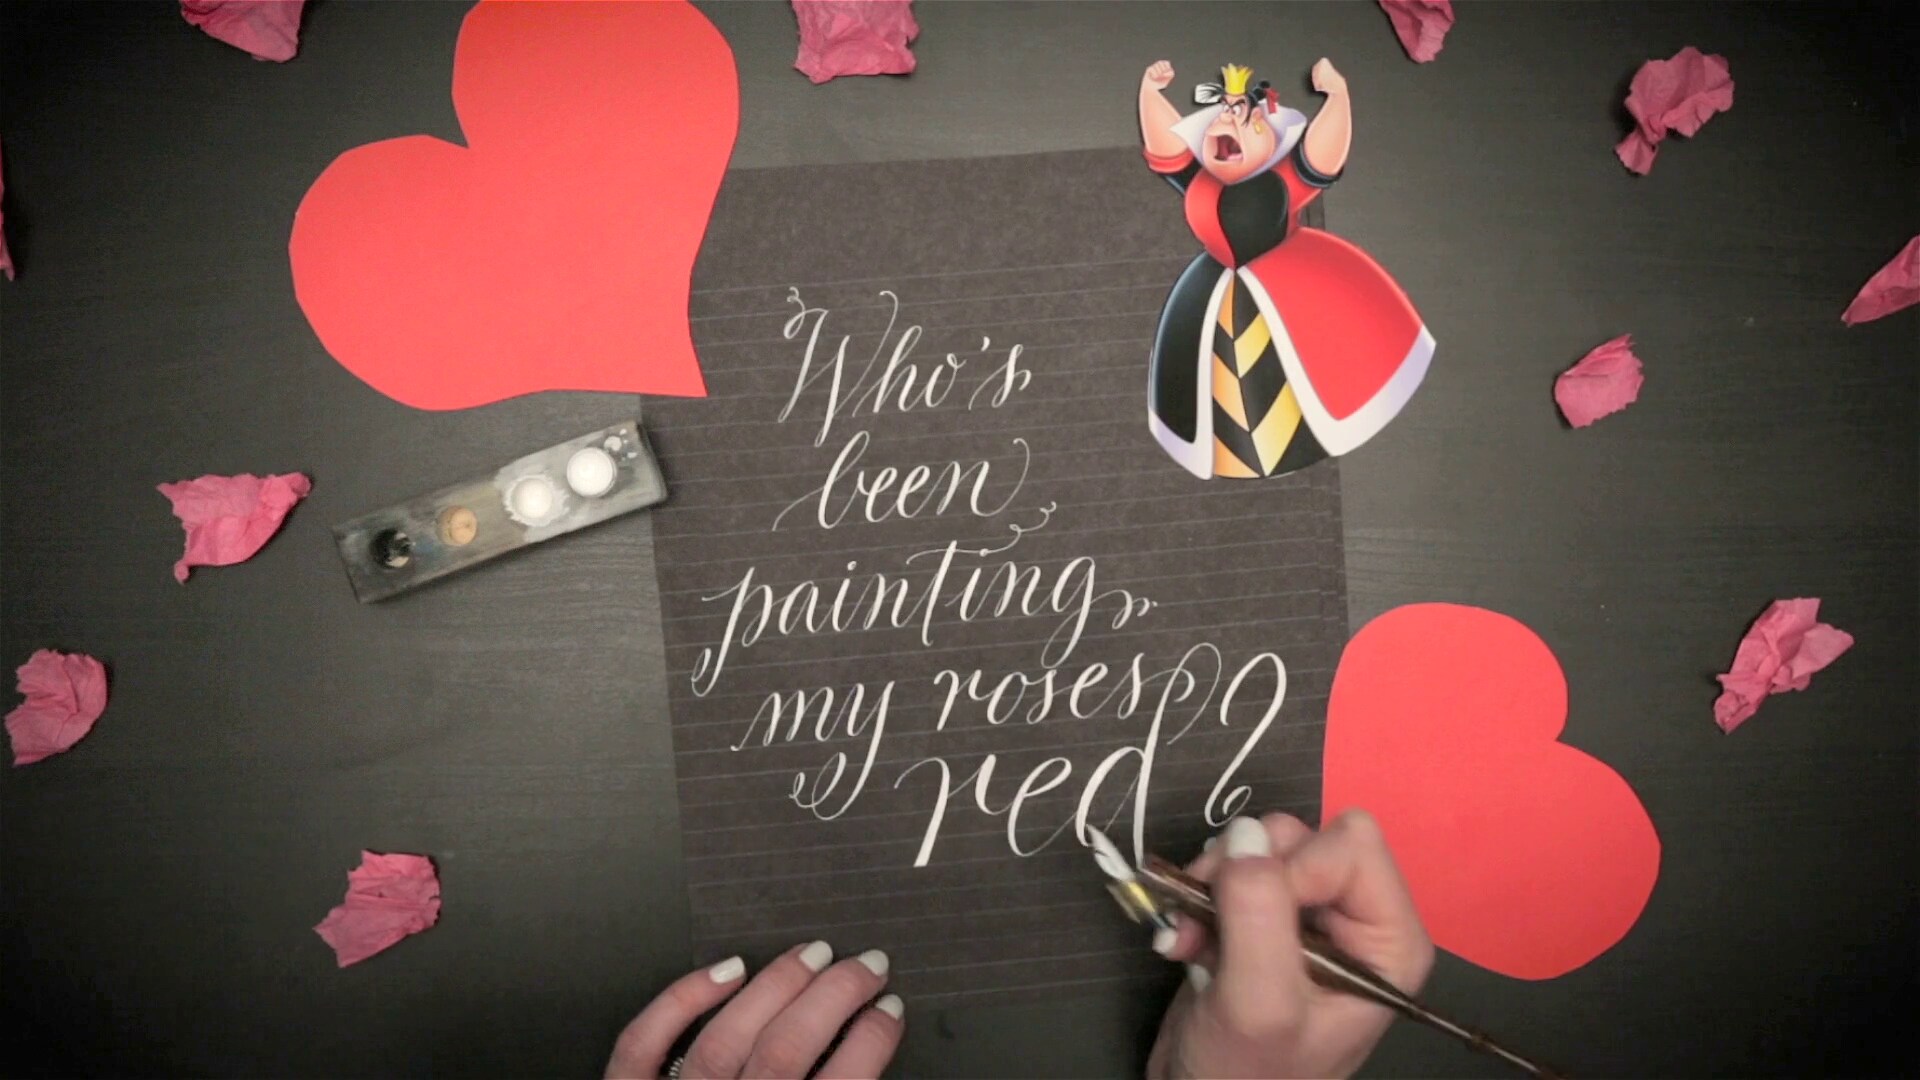 Calligraphy Artist Creates Amazing Disney Villain Quotes Part 2 